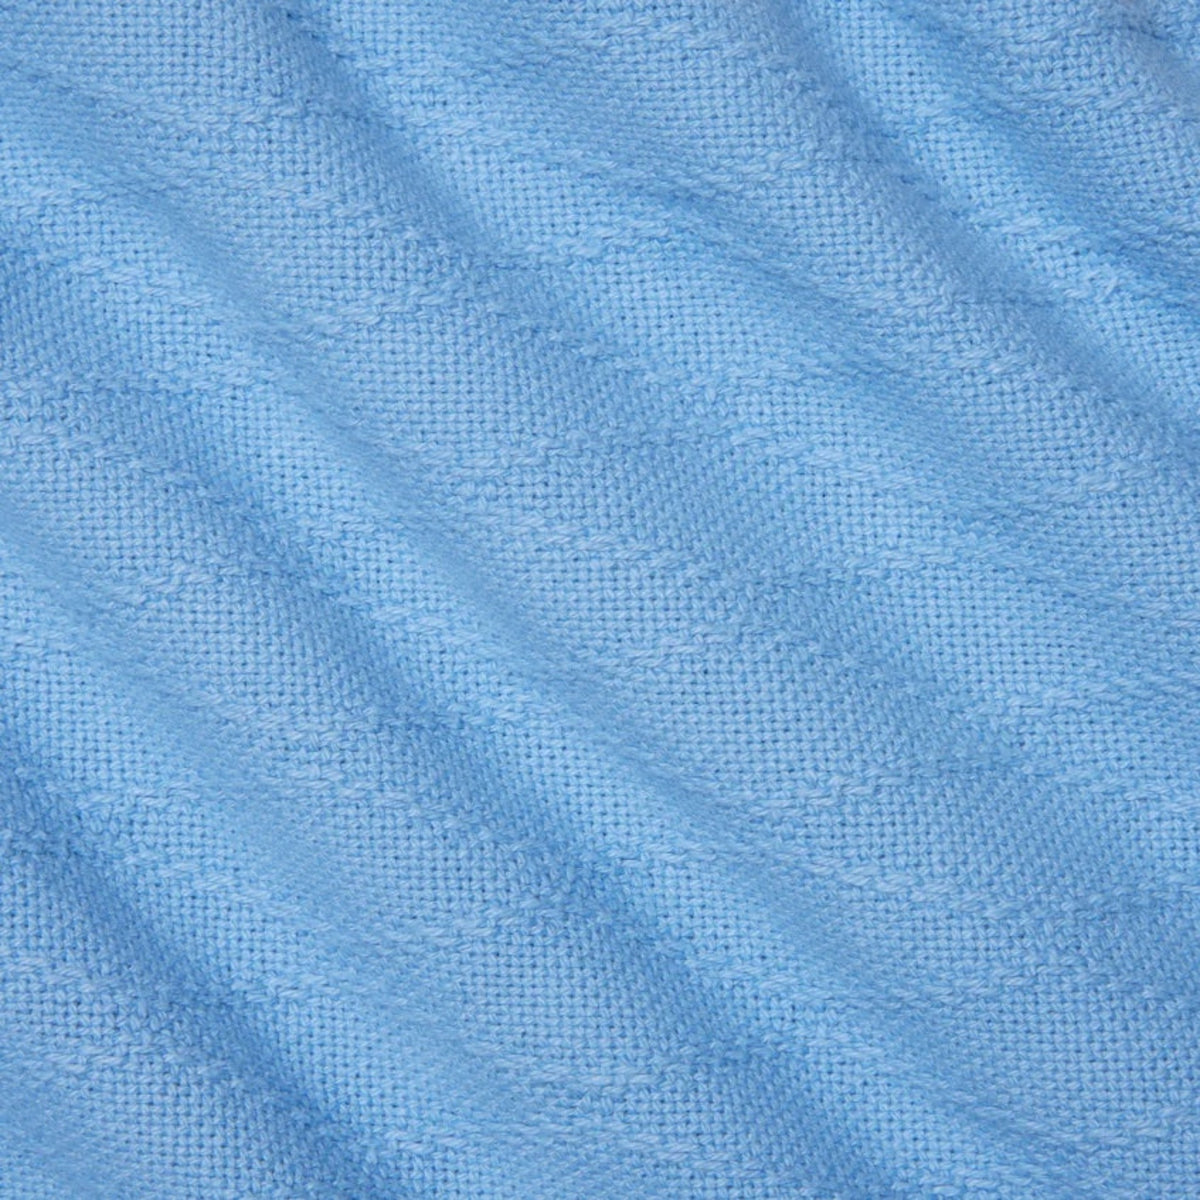 Swatch Sample of Sferra Cetara Bedding Cobalt Color